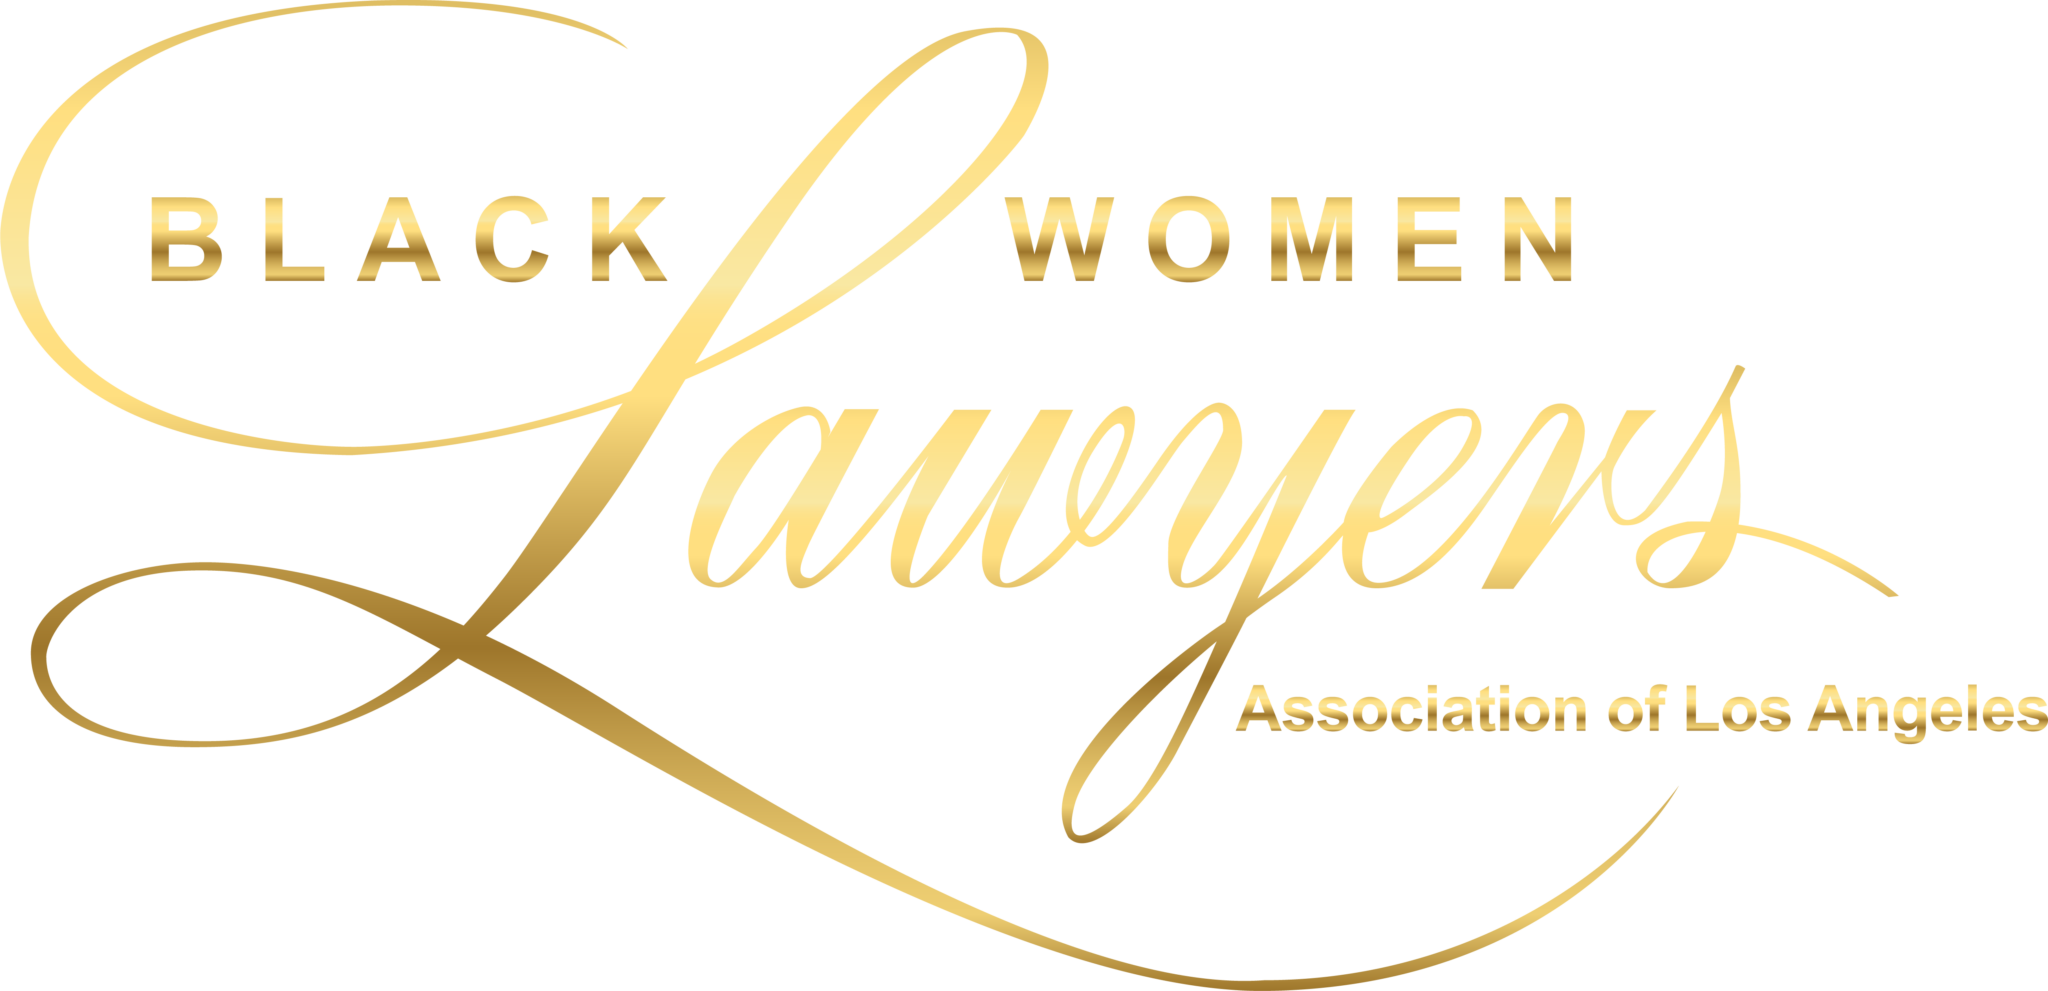 black women lawyers association of los angeles